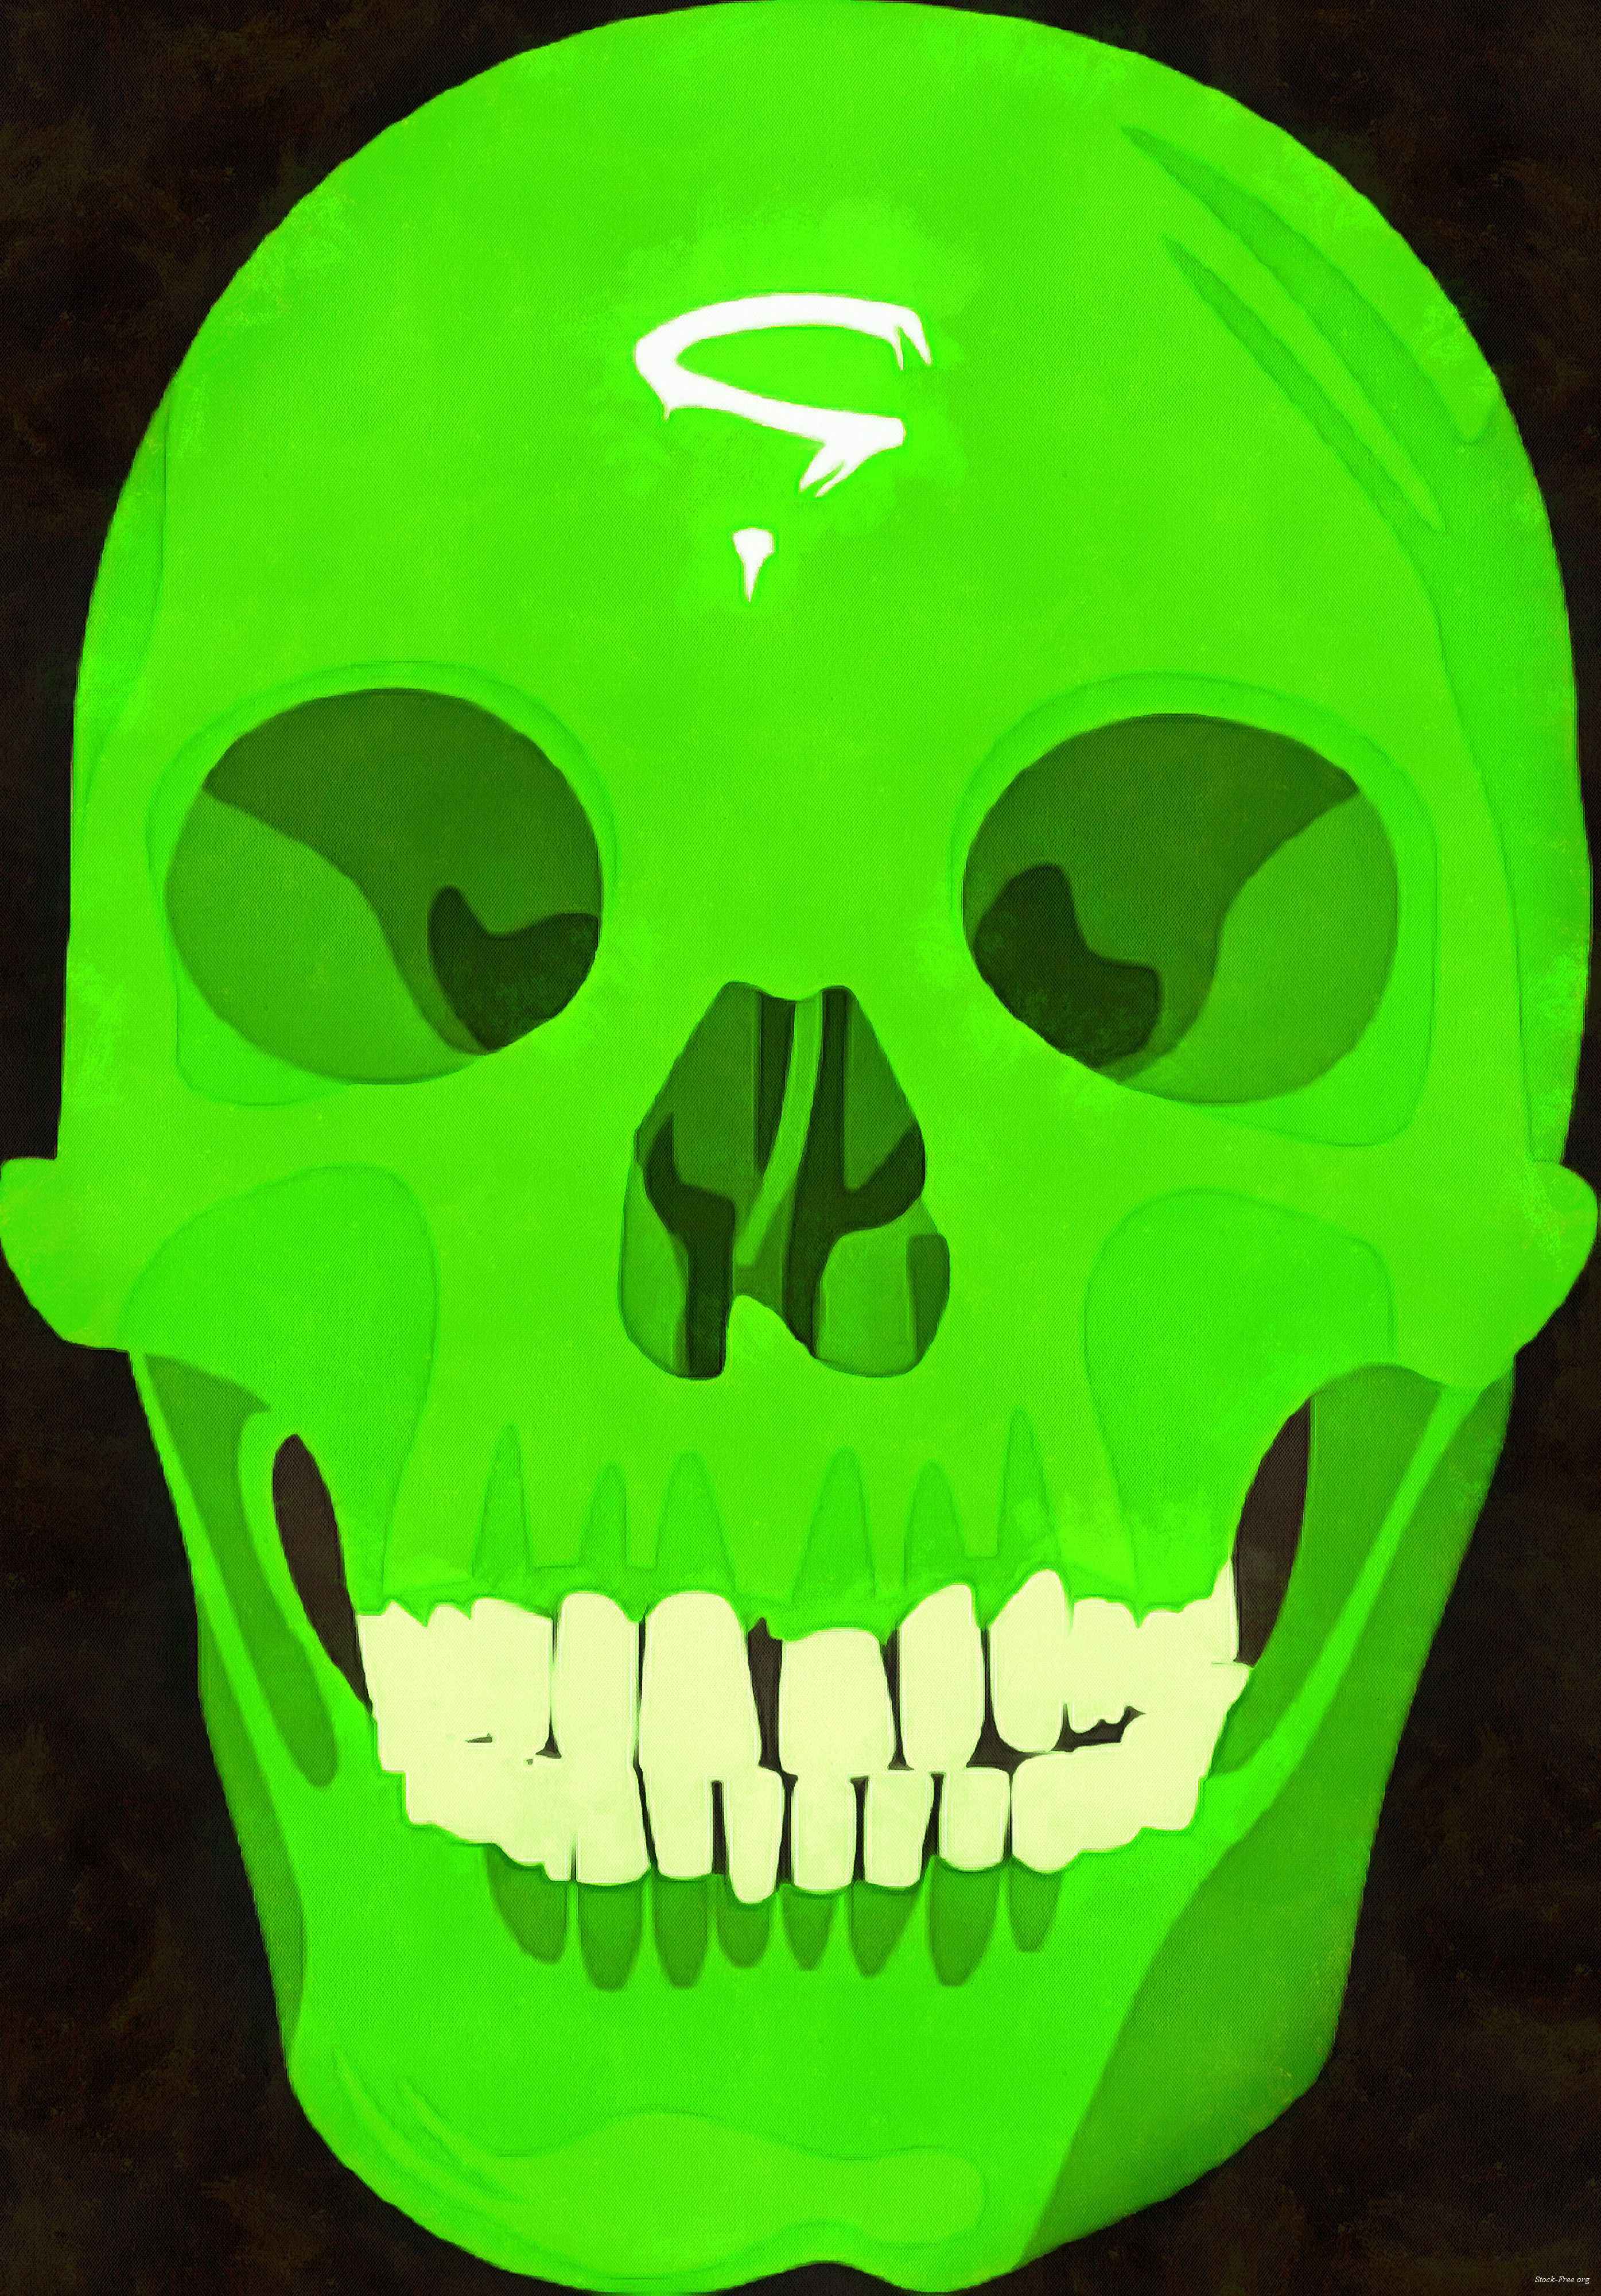 skull, head, bones, horror, skeleton, fear, smile, halloween - halloween free image, free images, public domain images, stock free images, download image for free, halloween stock free images